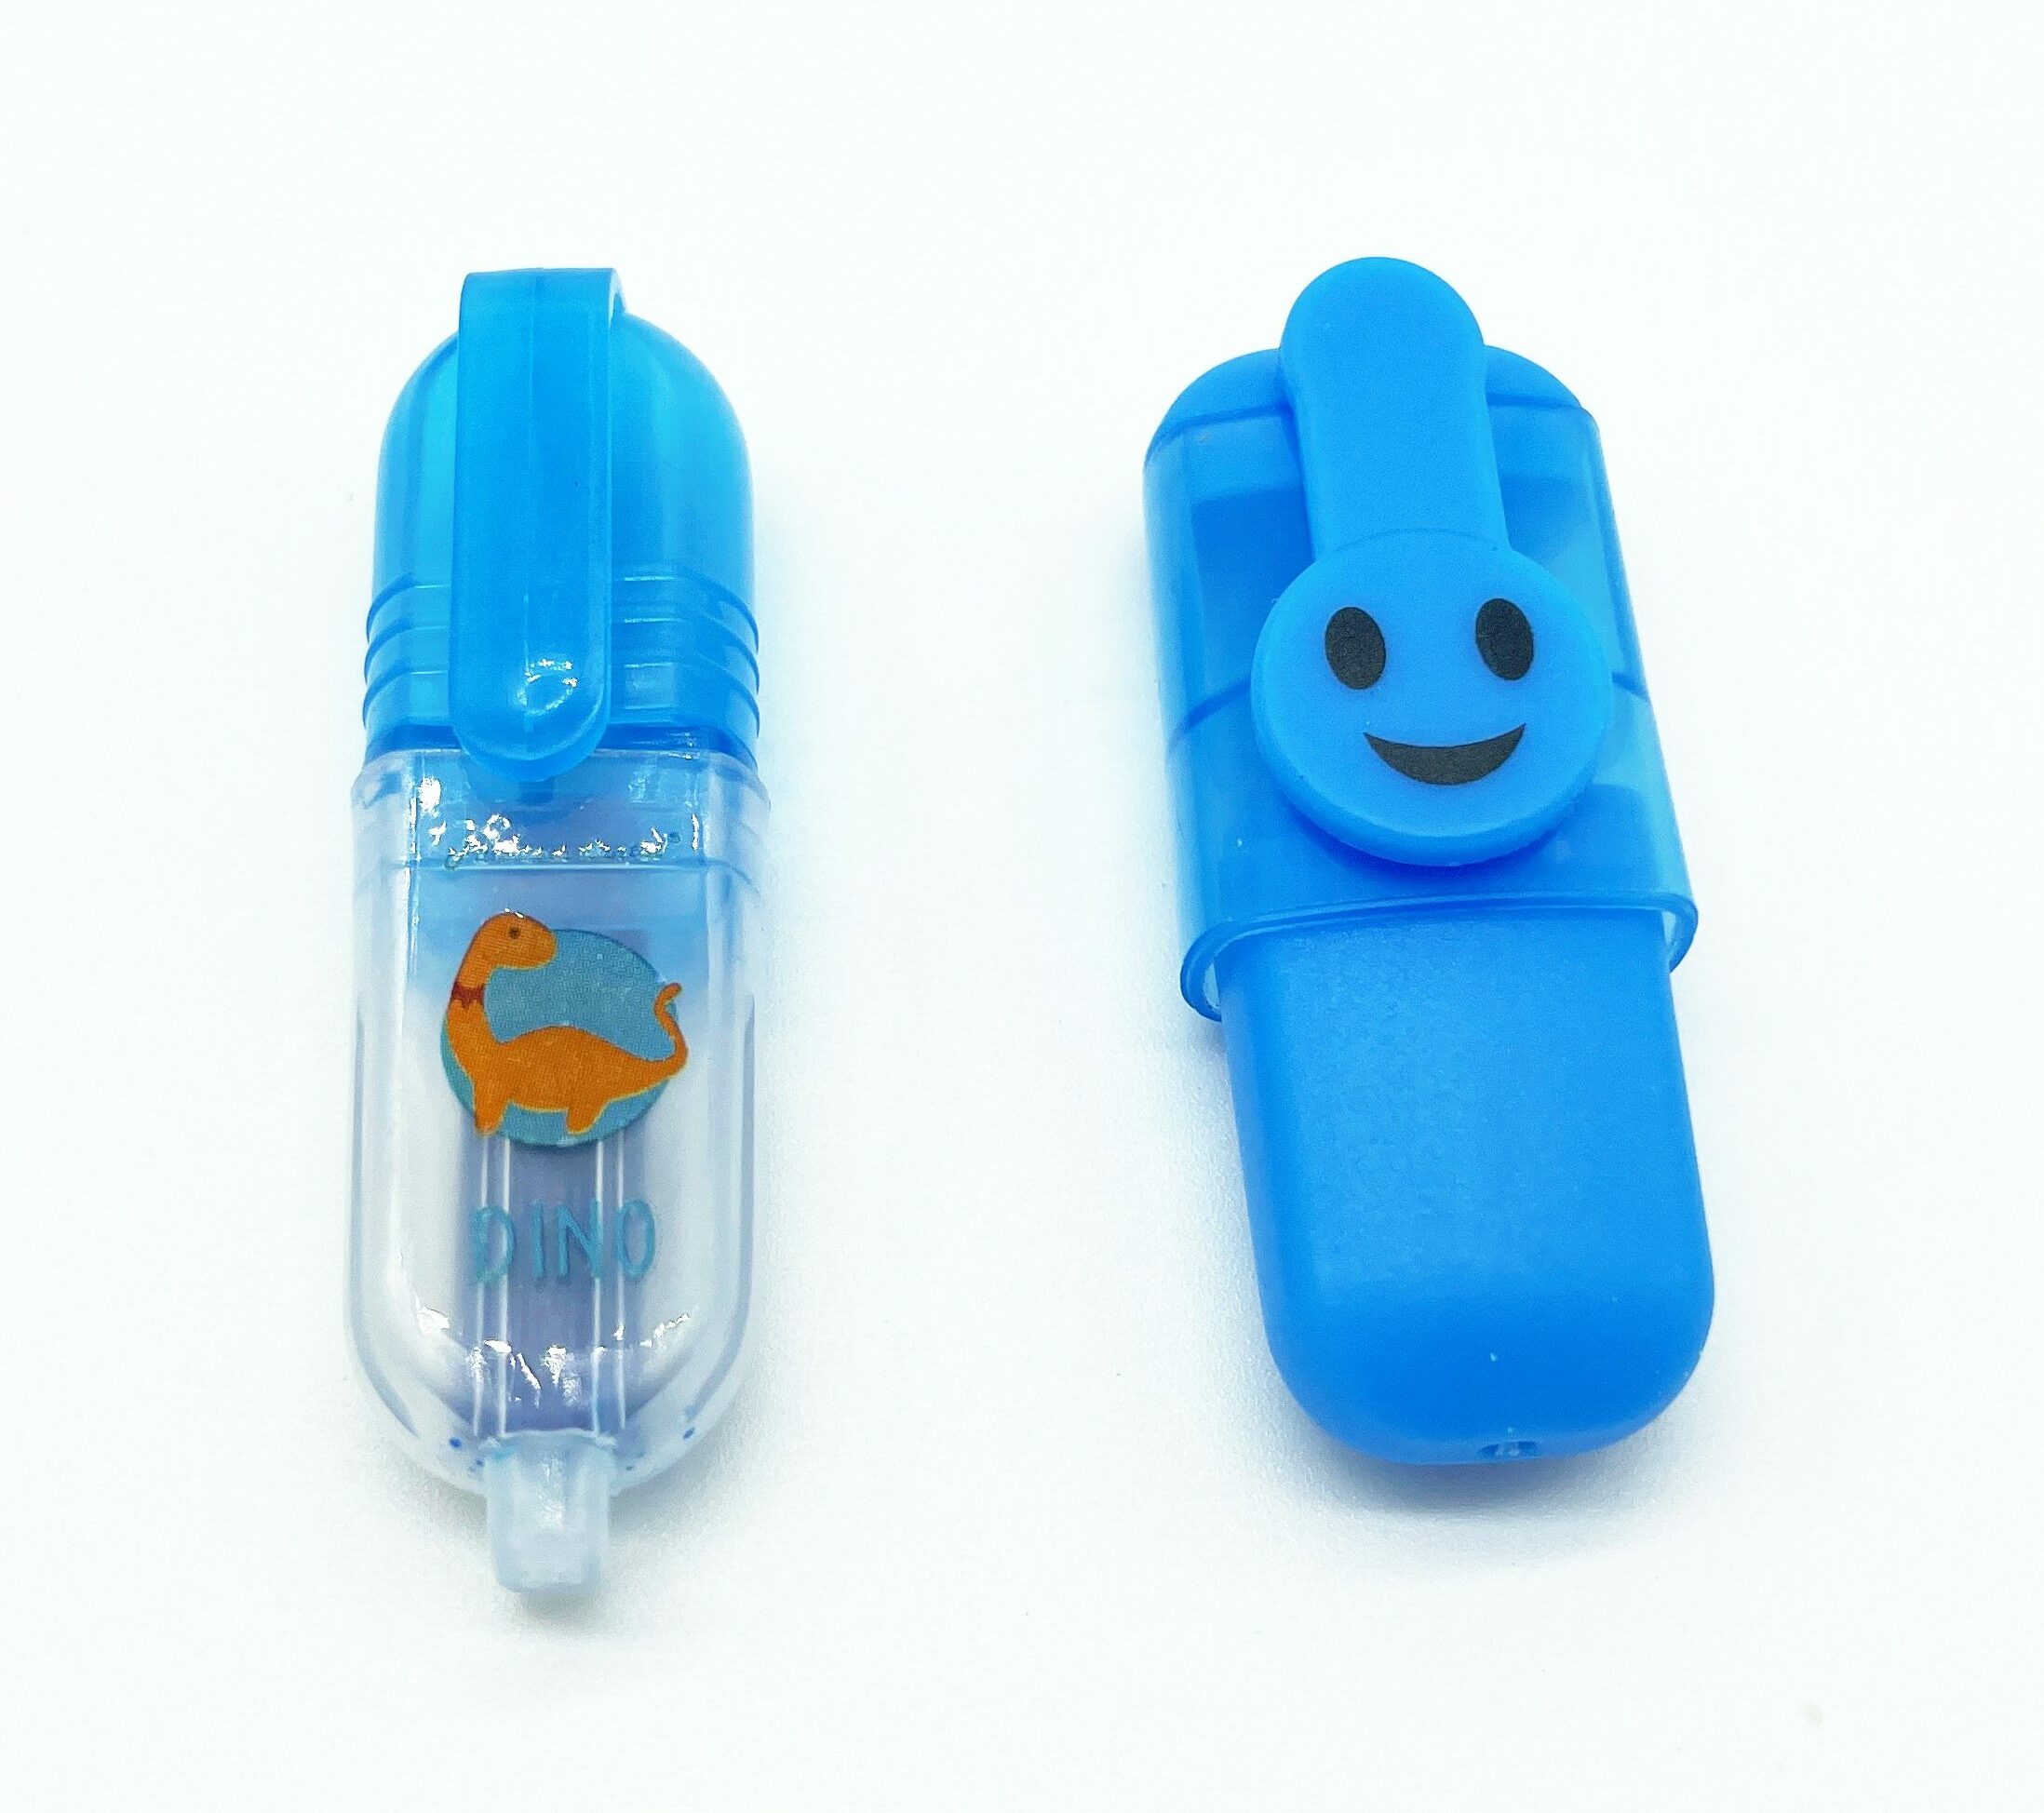 Subrayador fluorescente Mia, Dino y Baddy - Sticker highlighter Bader  BADER®️ DENTAL - Bader®️ Dental